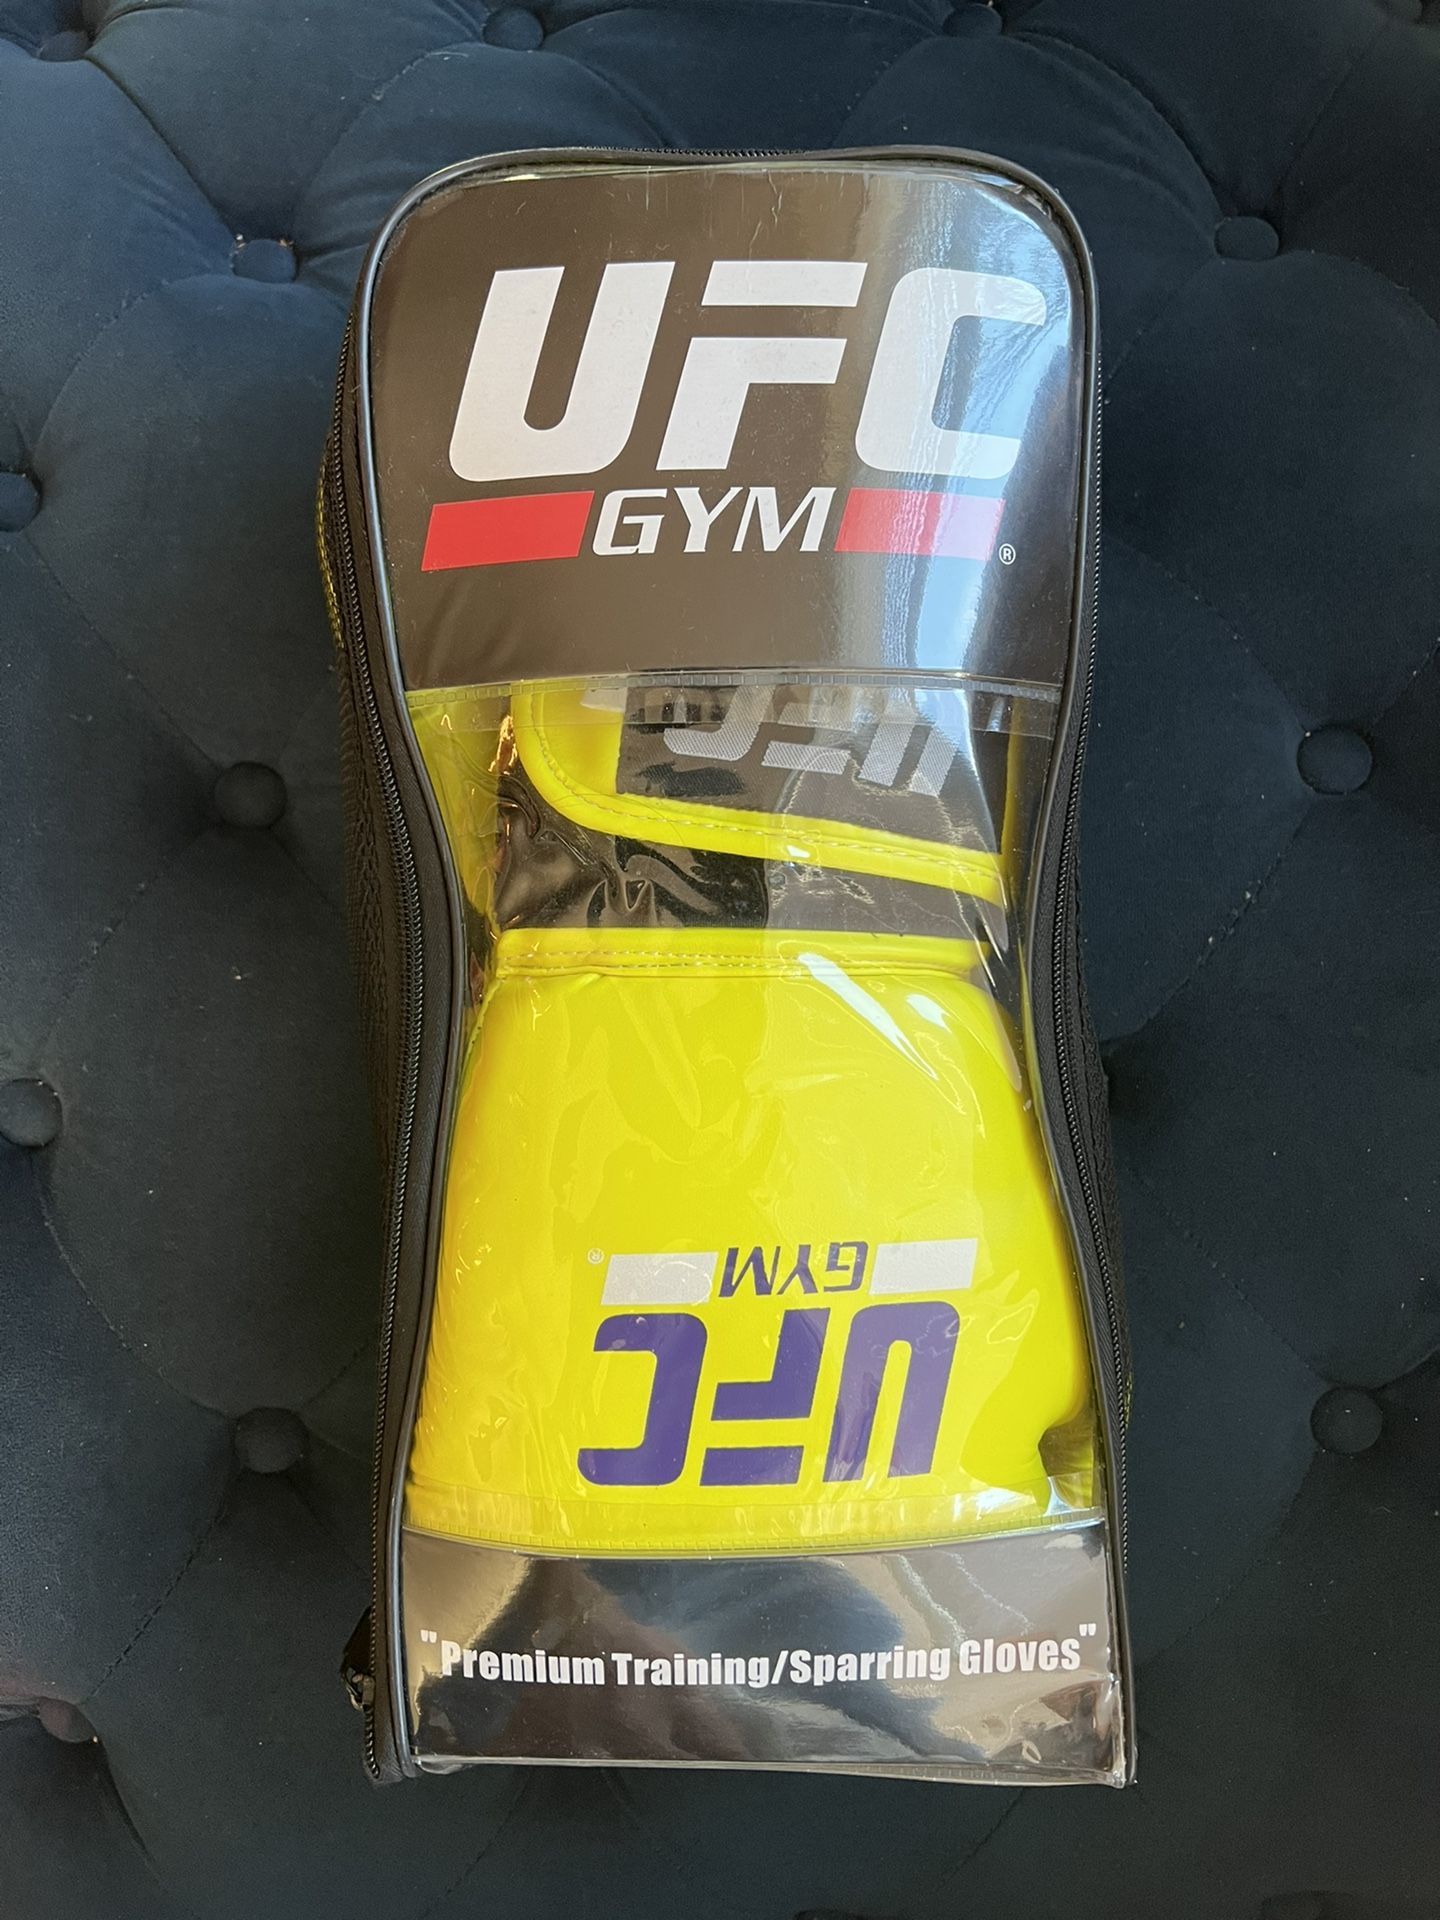 UFC Training/Sparring Gloves 